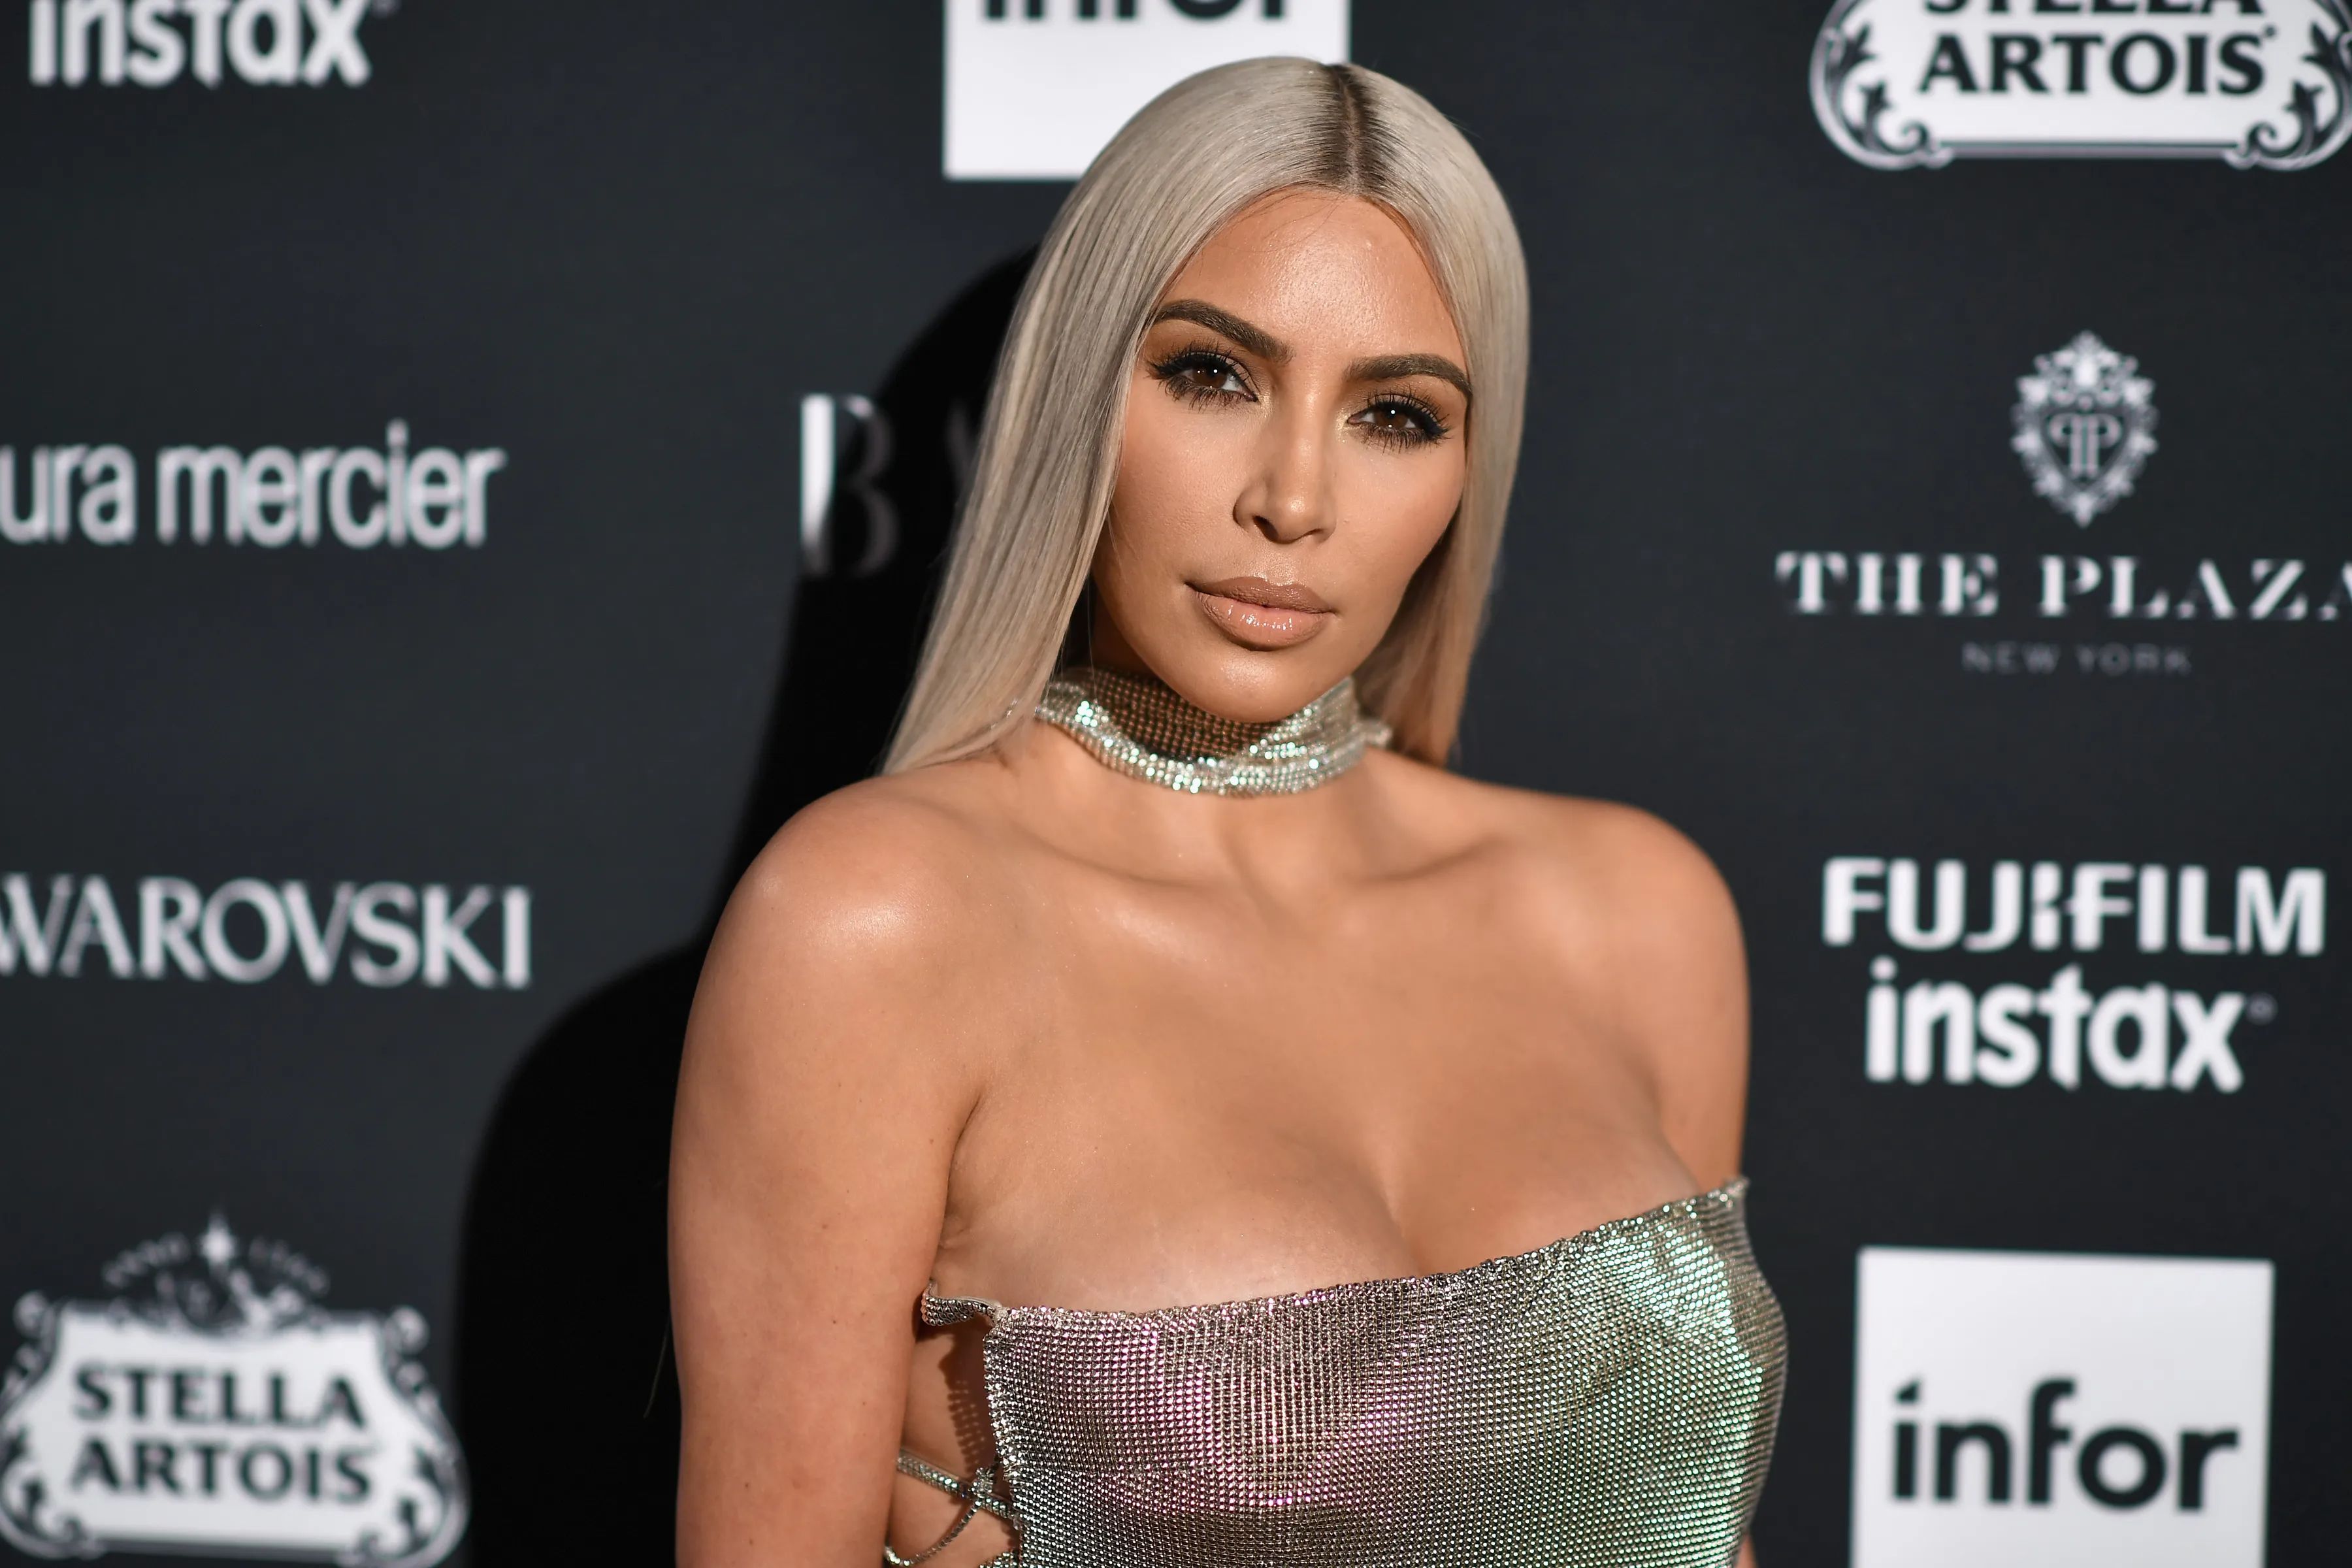  Kim Kardashian attends Harper's BAZAAR Celebration of 'ICONS By Carine Roitfeld' at The Plaza Hotel in New York. 